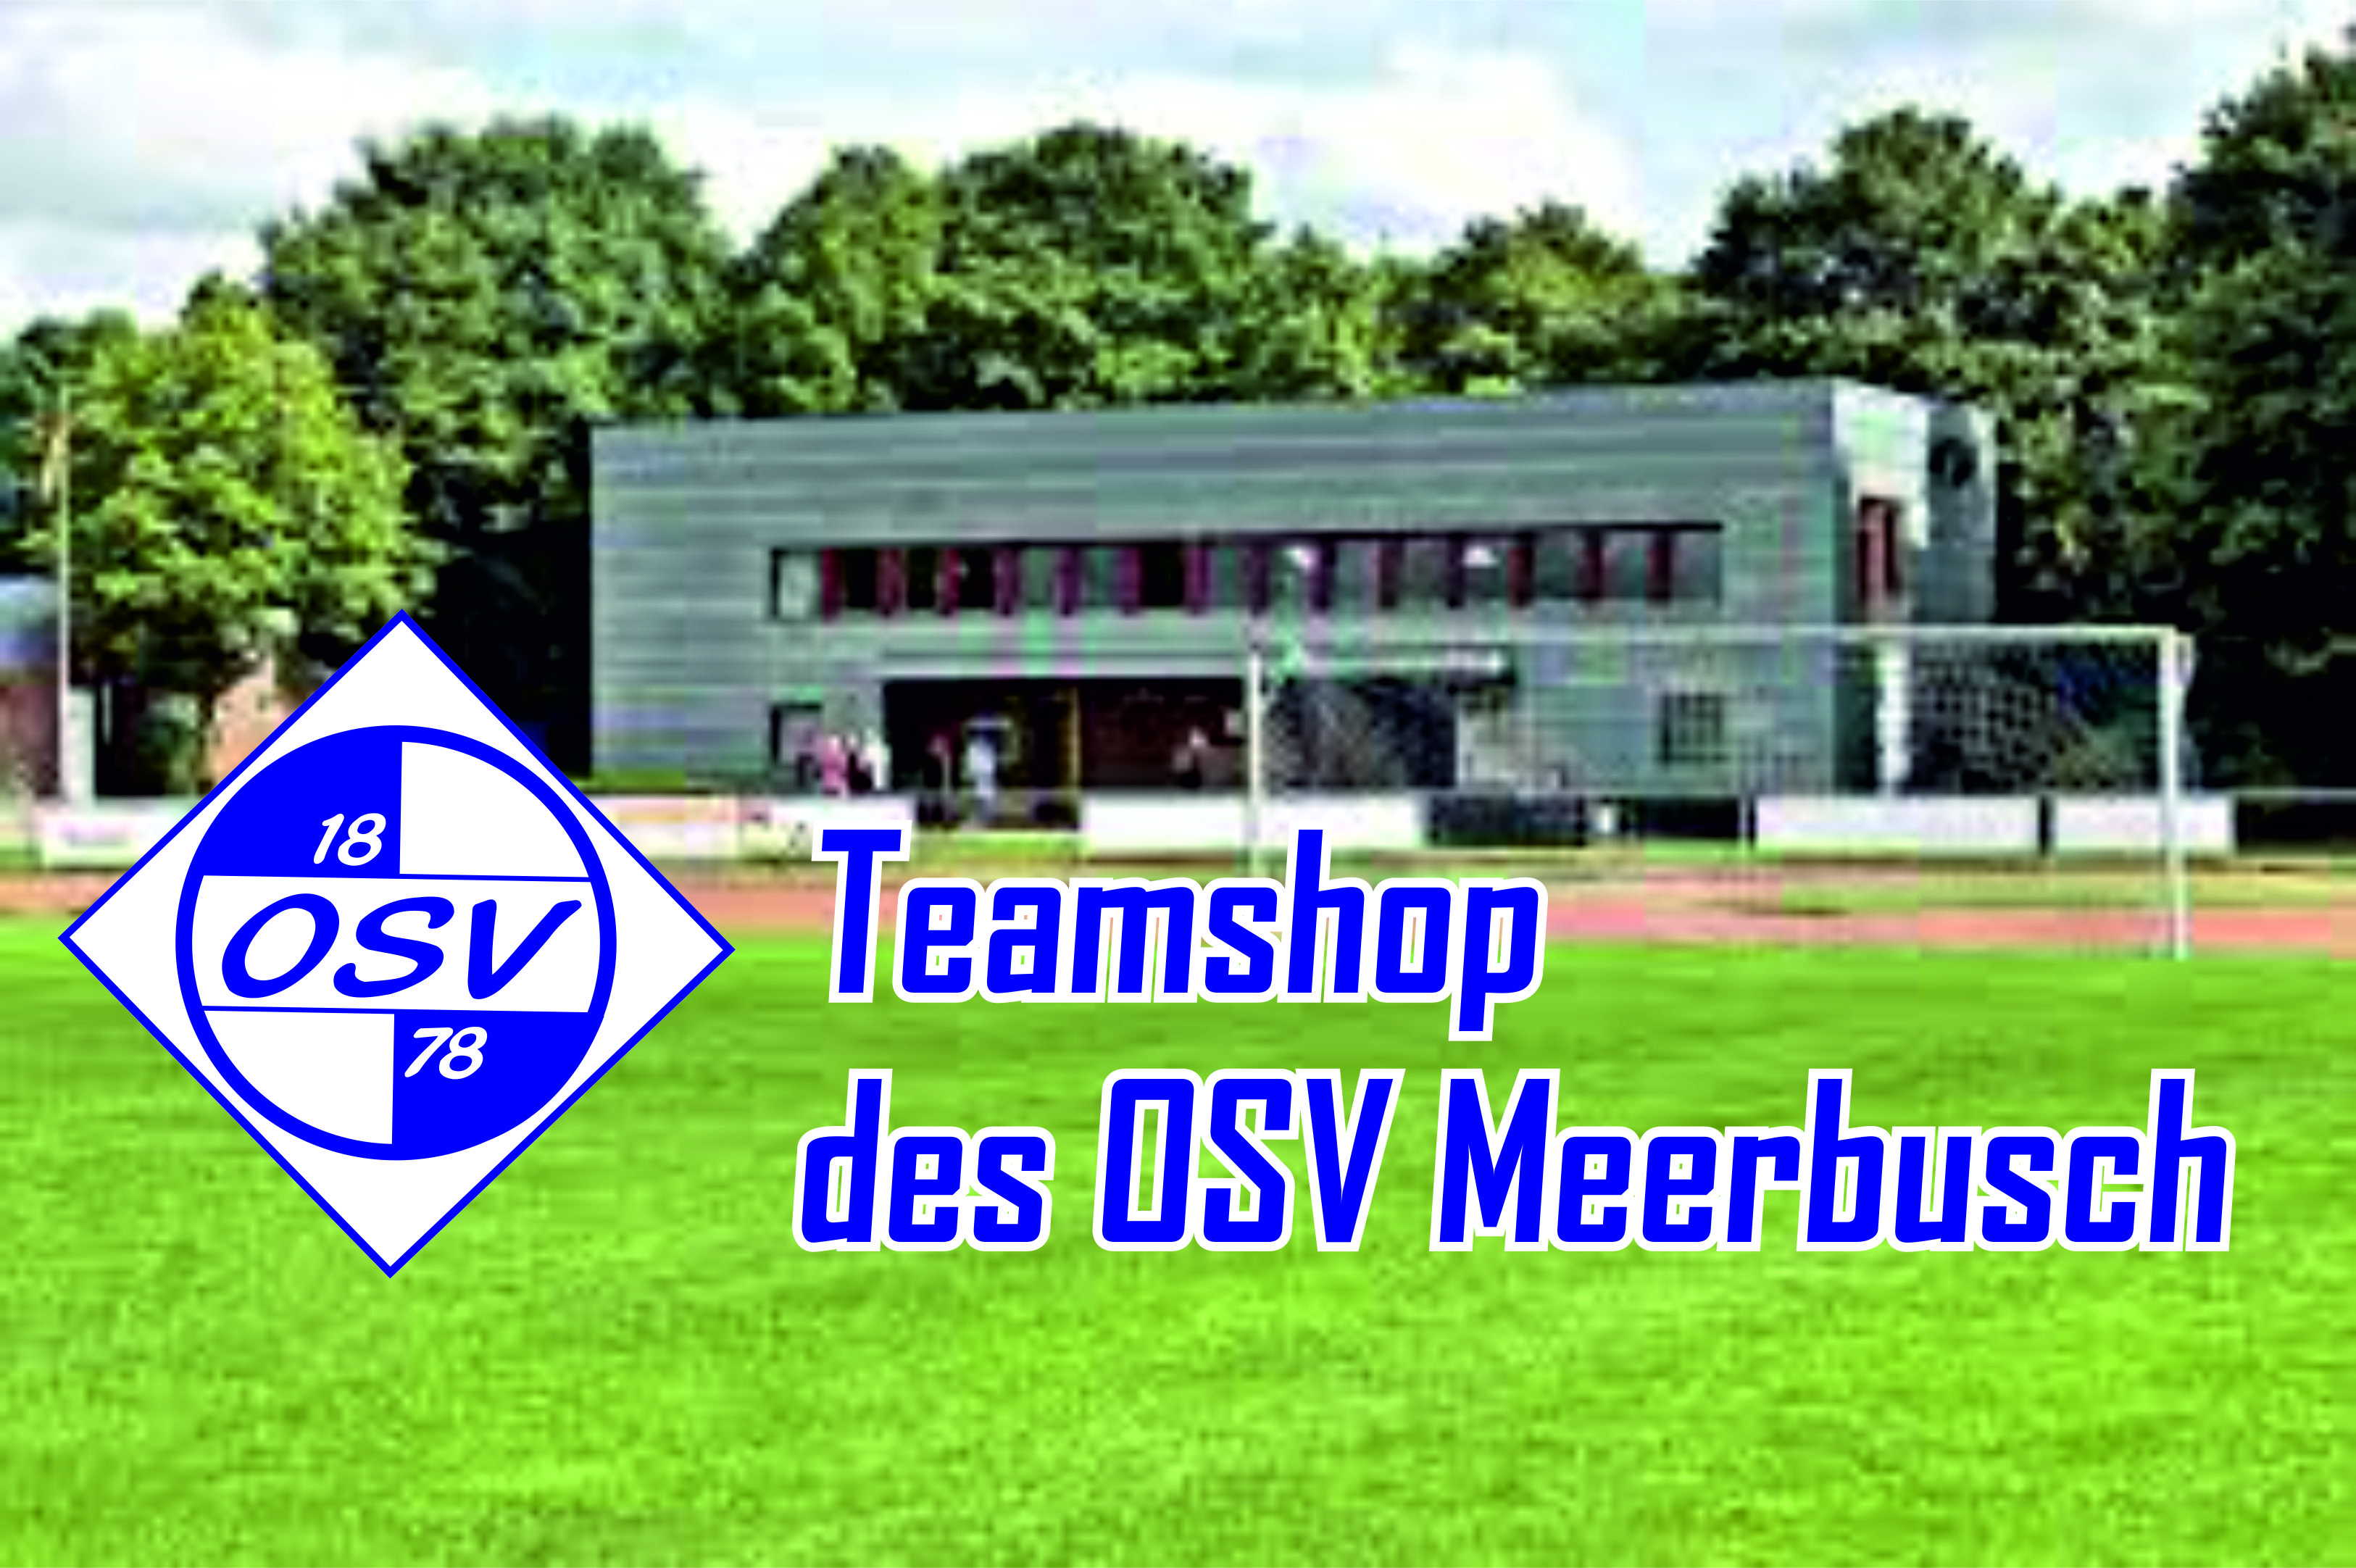 Osterather Sportverein 18/78 Meerbusch Title Image